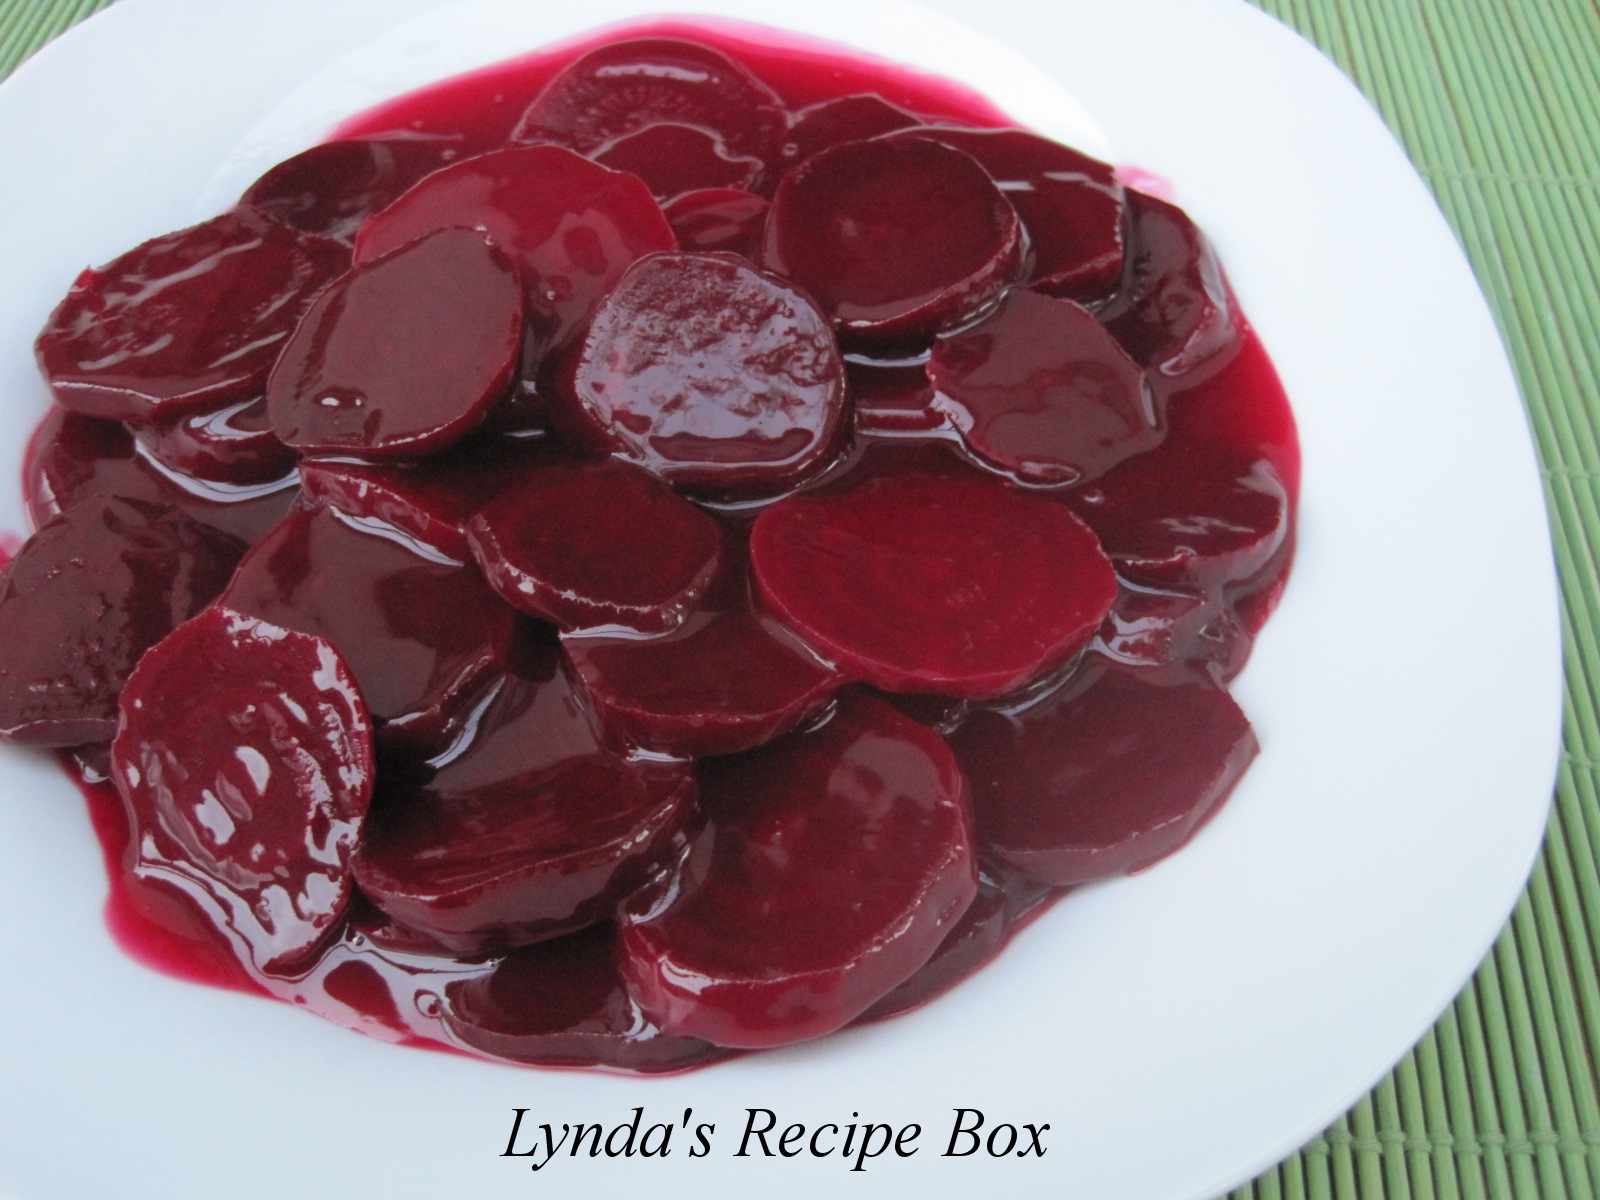 Lynda's Recipe Box: How To Make Fresh Harvard Beets